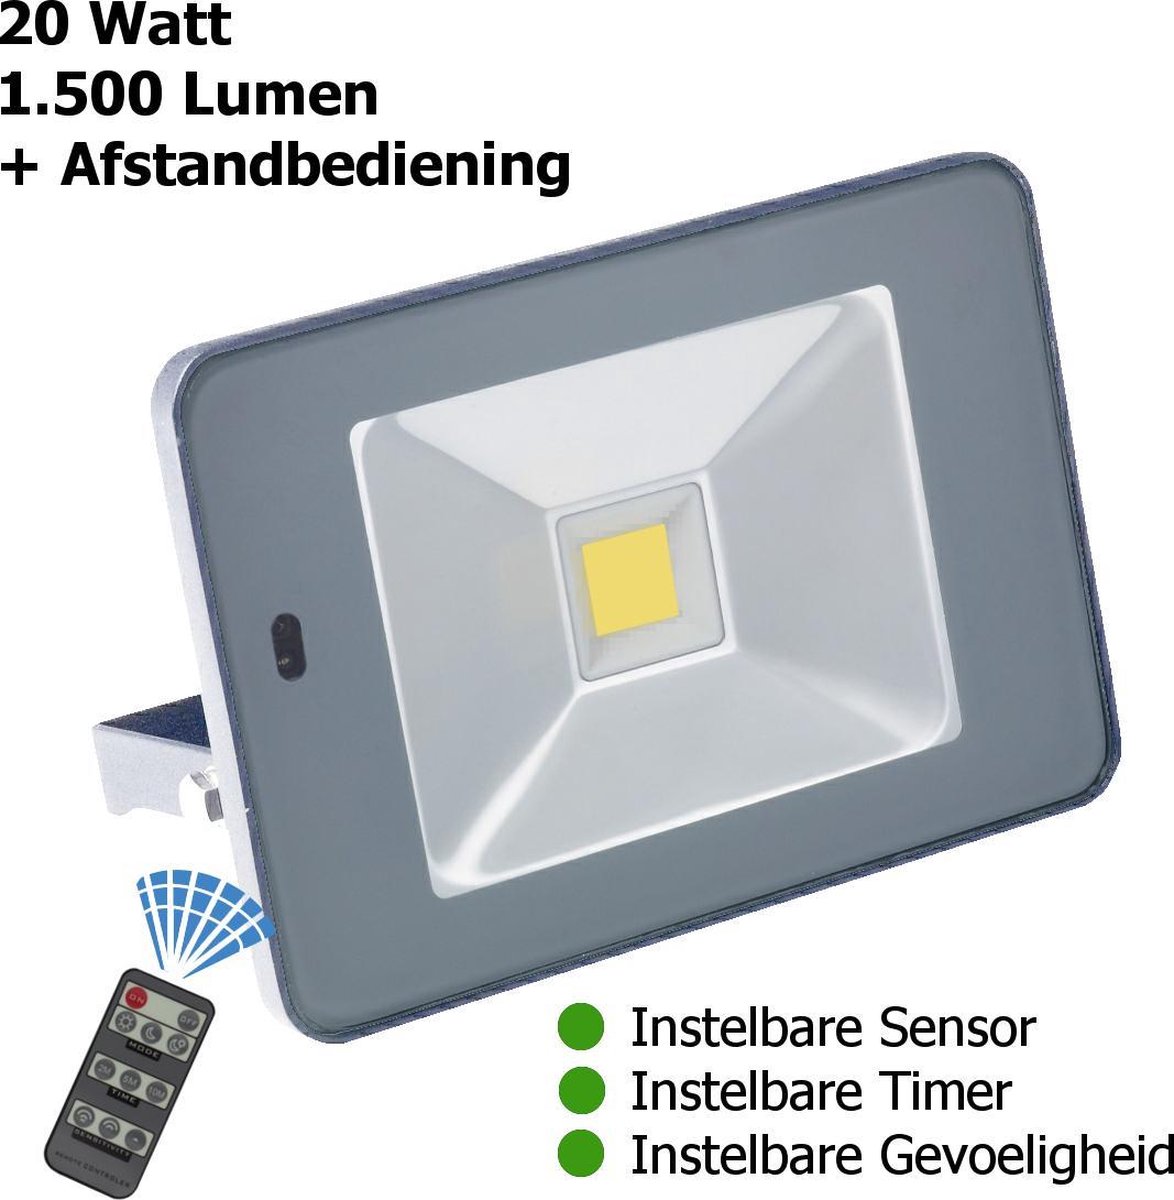 LED Straler - bewegingssensor - Met afstandbediening - 20W - 1500 lumen | bol.com